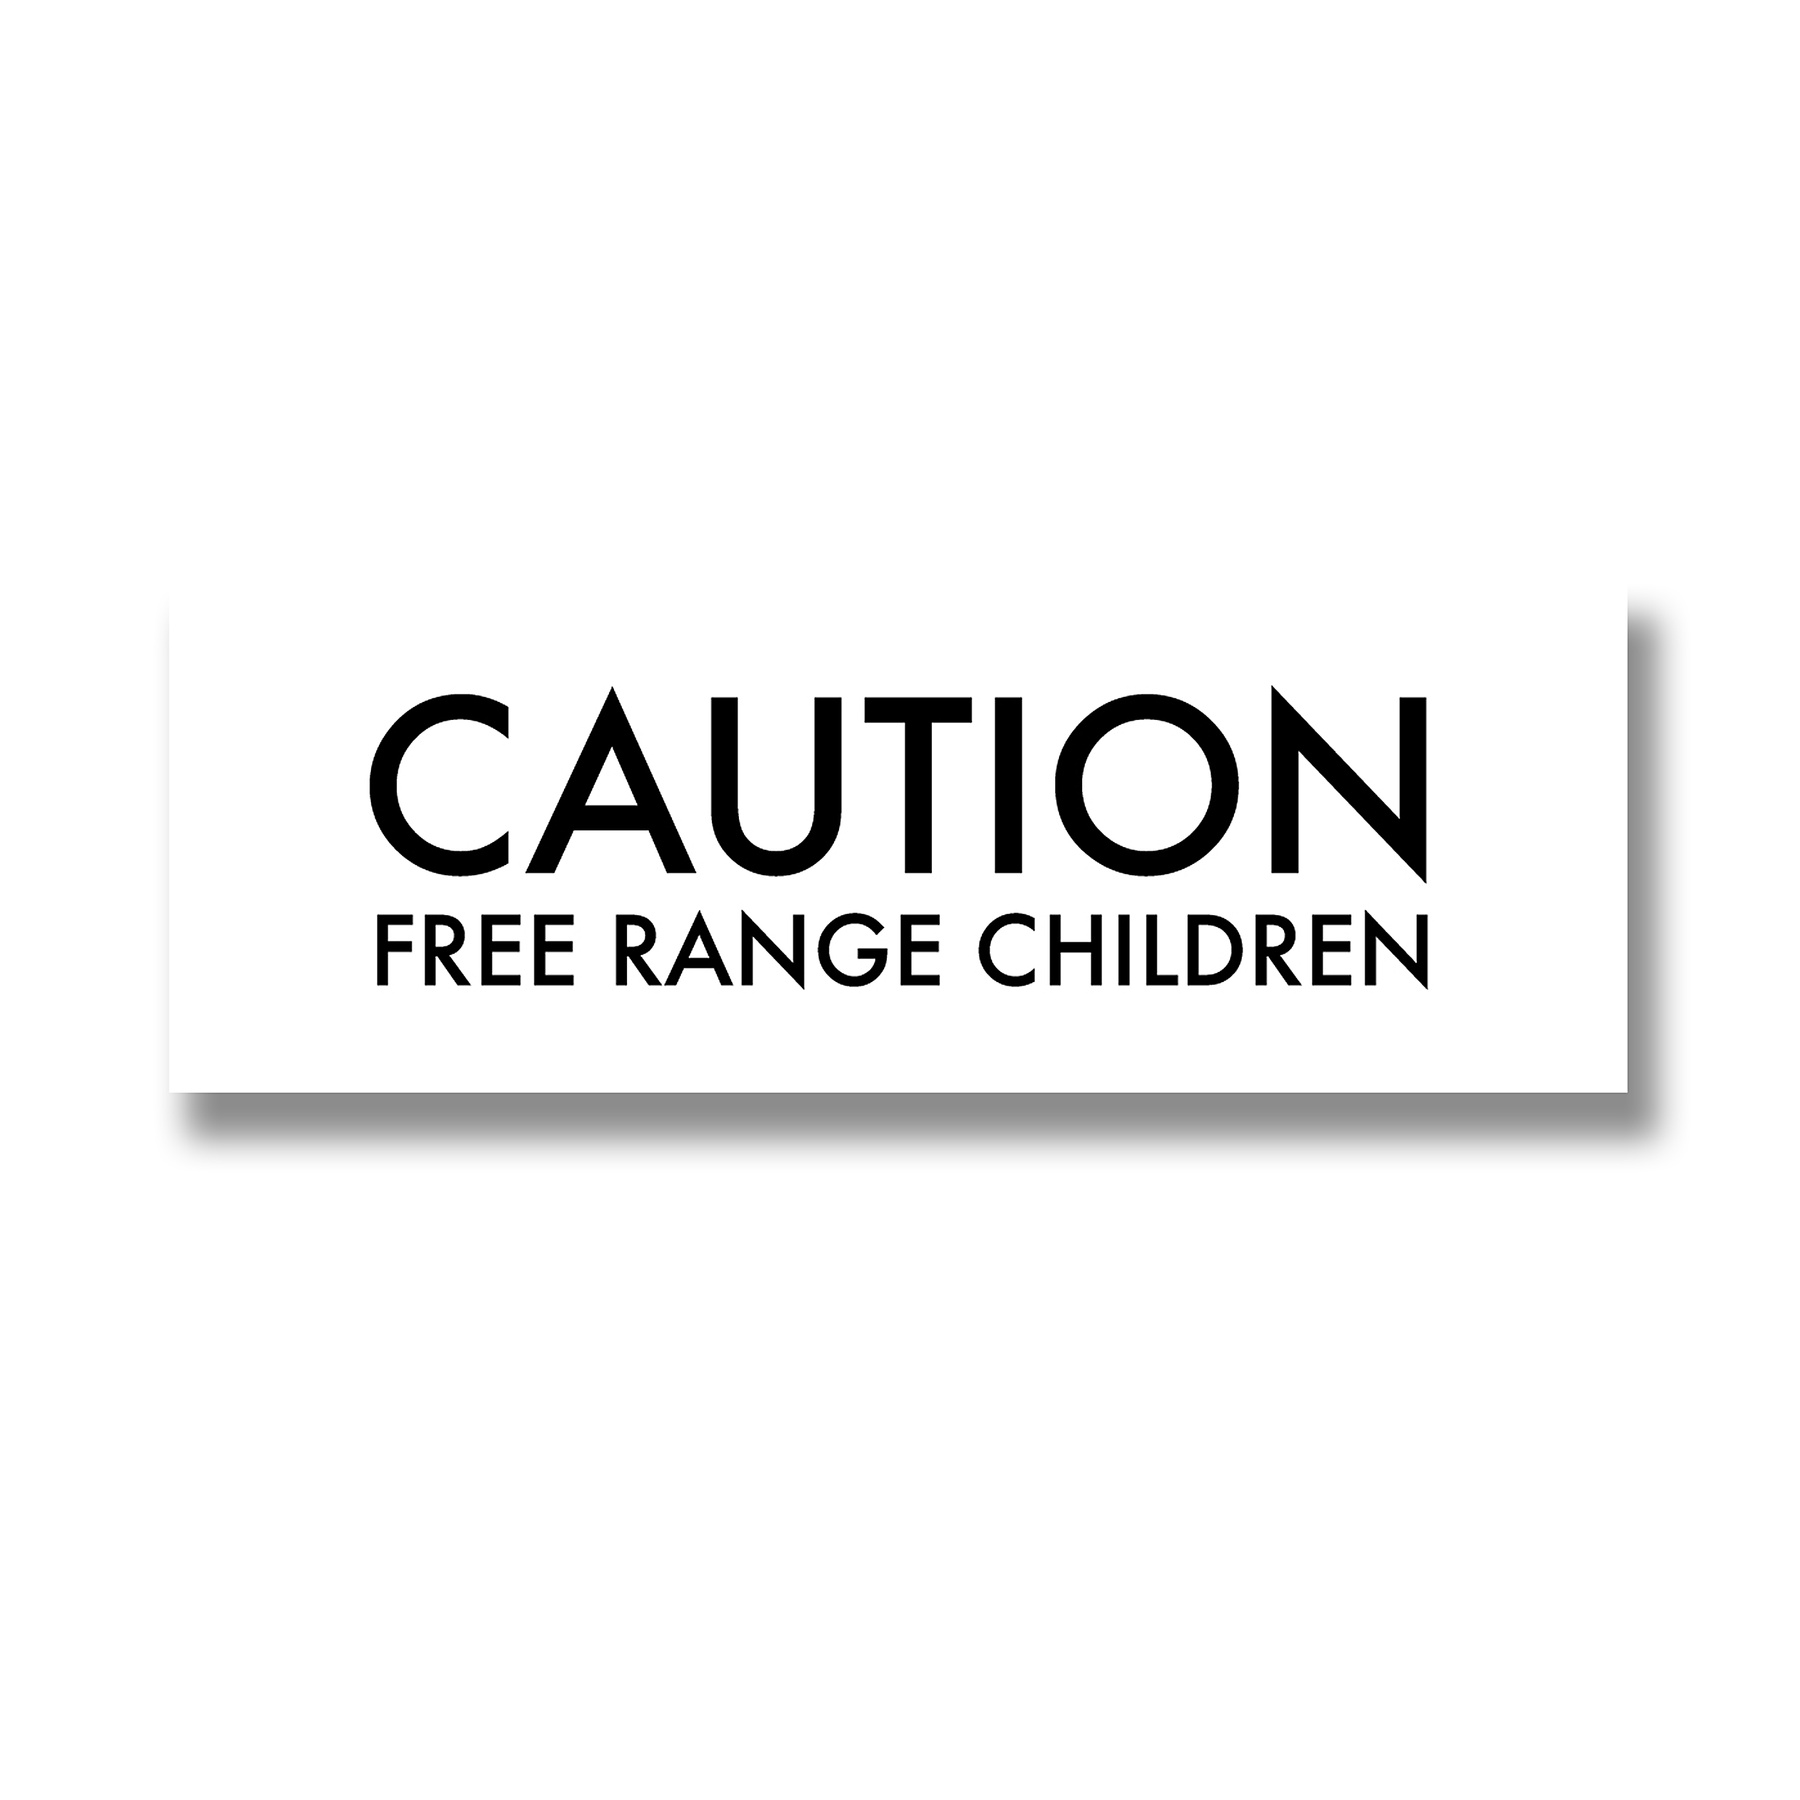 Caution Free Range Children Metallic Detail Plaque - Image 1